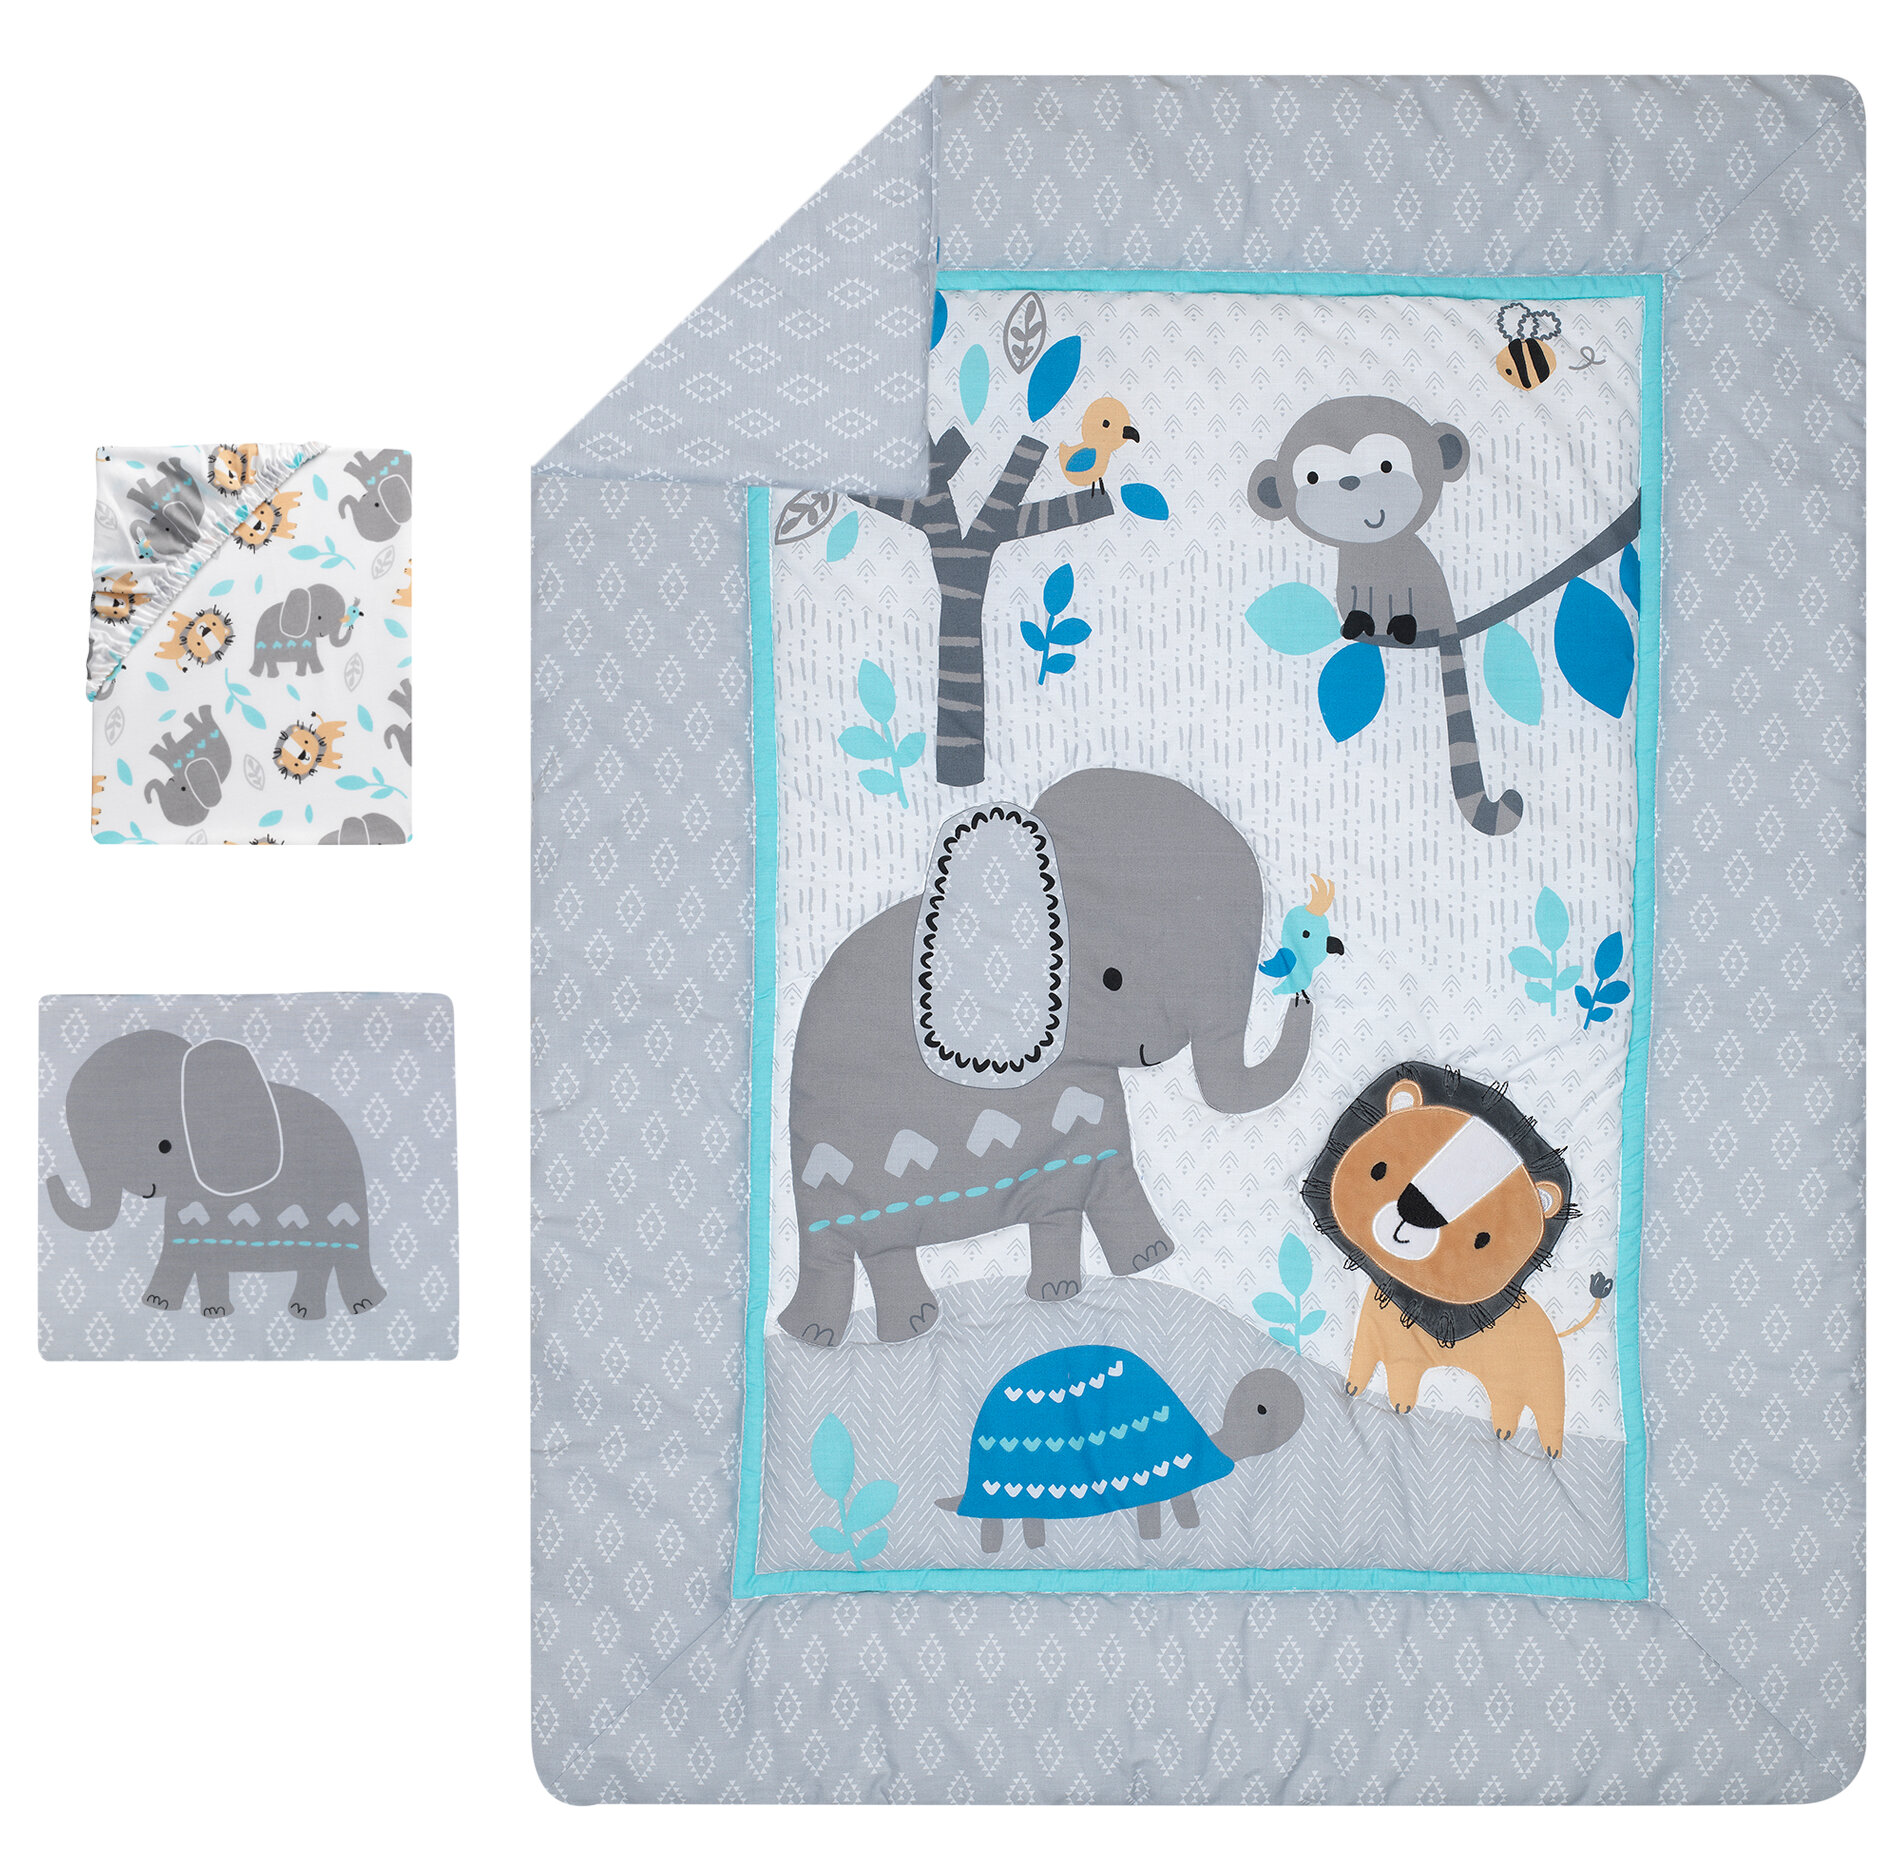 104 x 88, Kess InHouse Pom Graphic Design Elephant Play Orange Animal PrintKing Cotton Duvet Cover